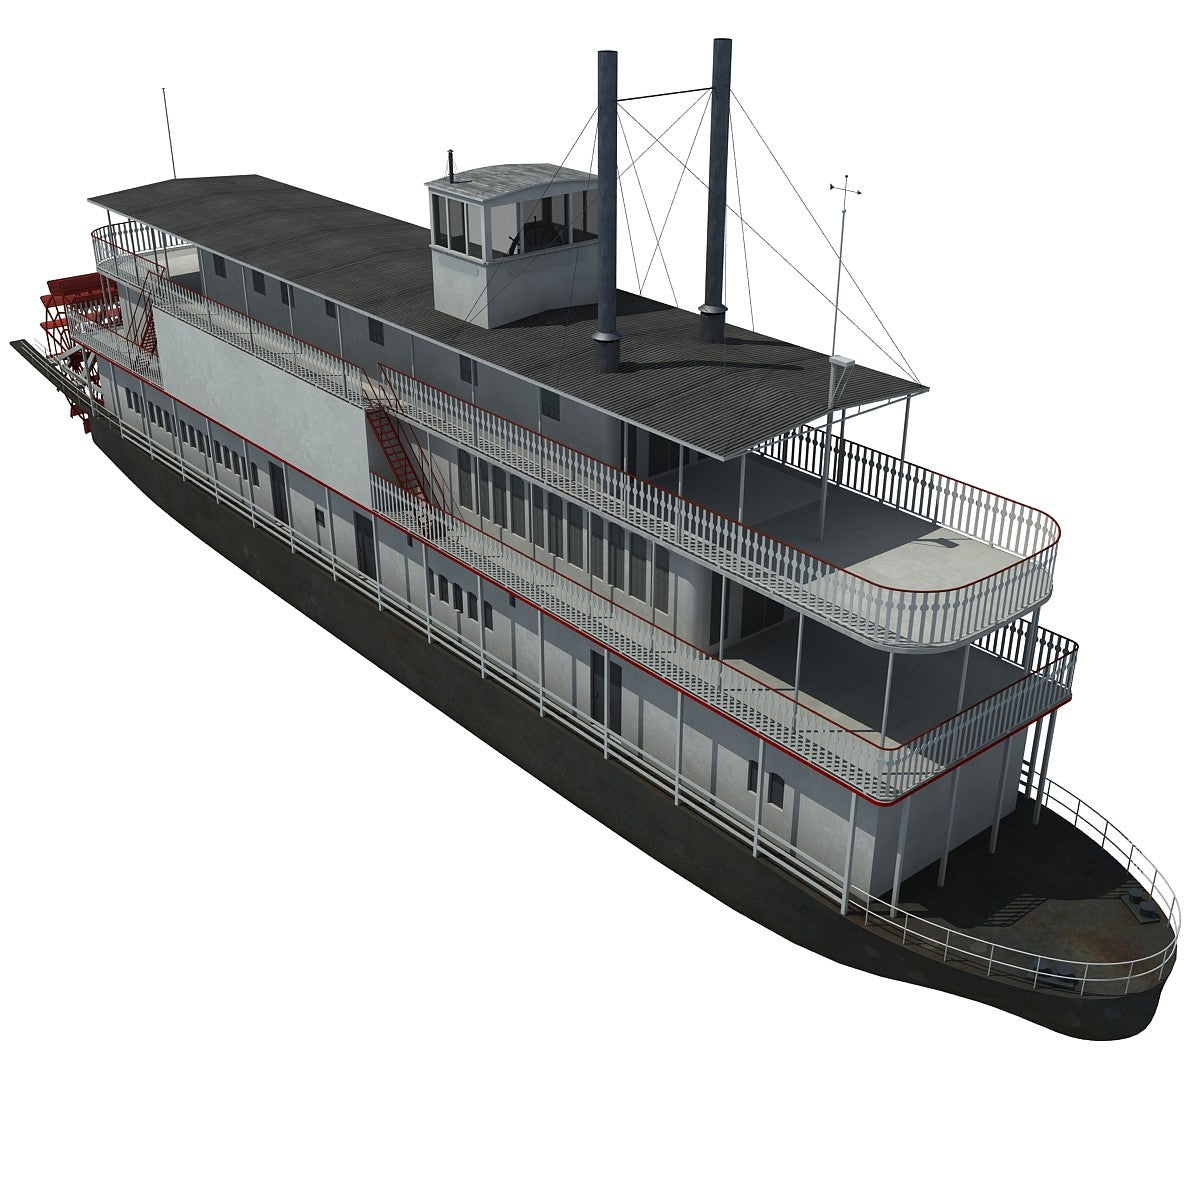 Steam Boat 3D Model